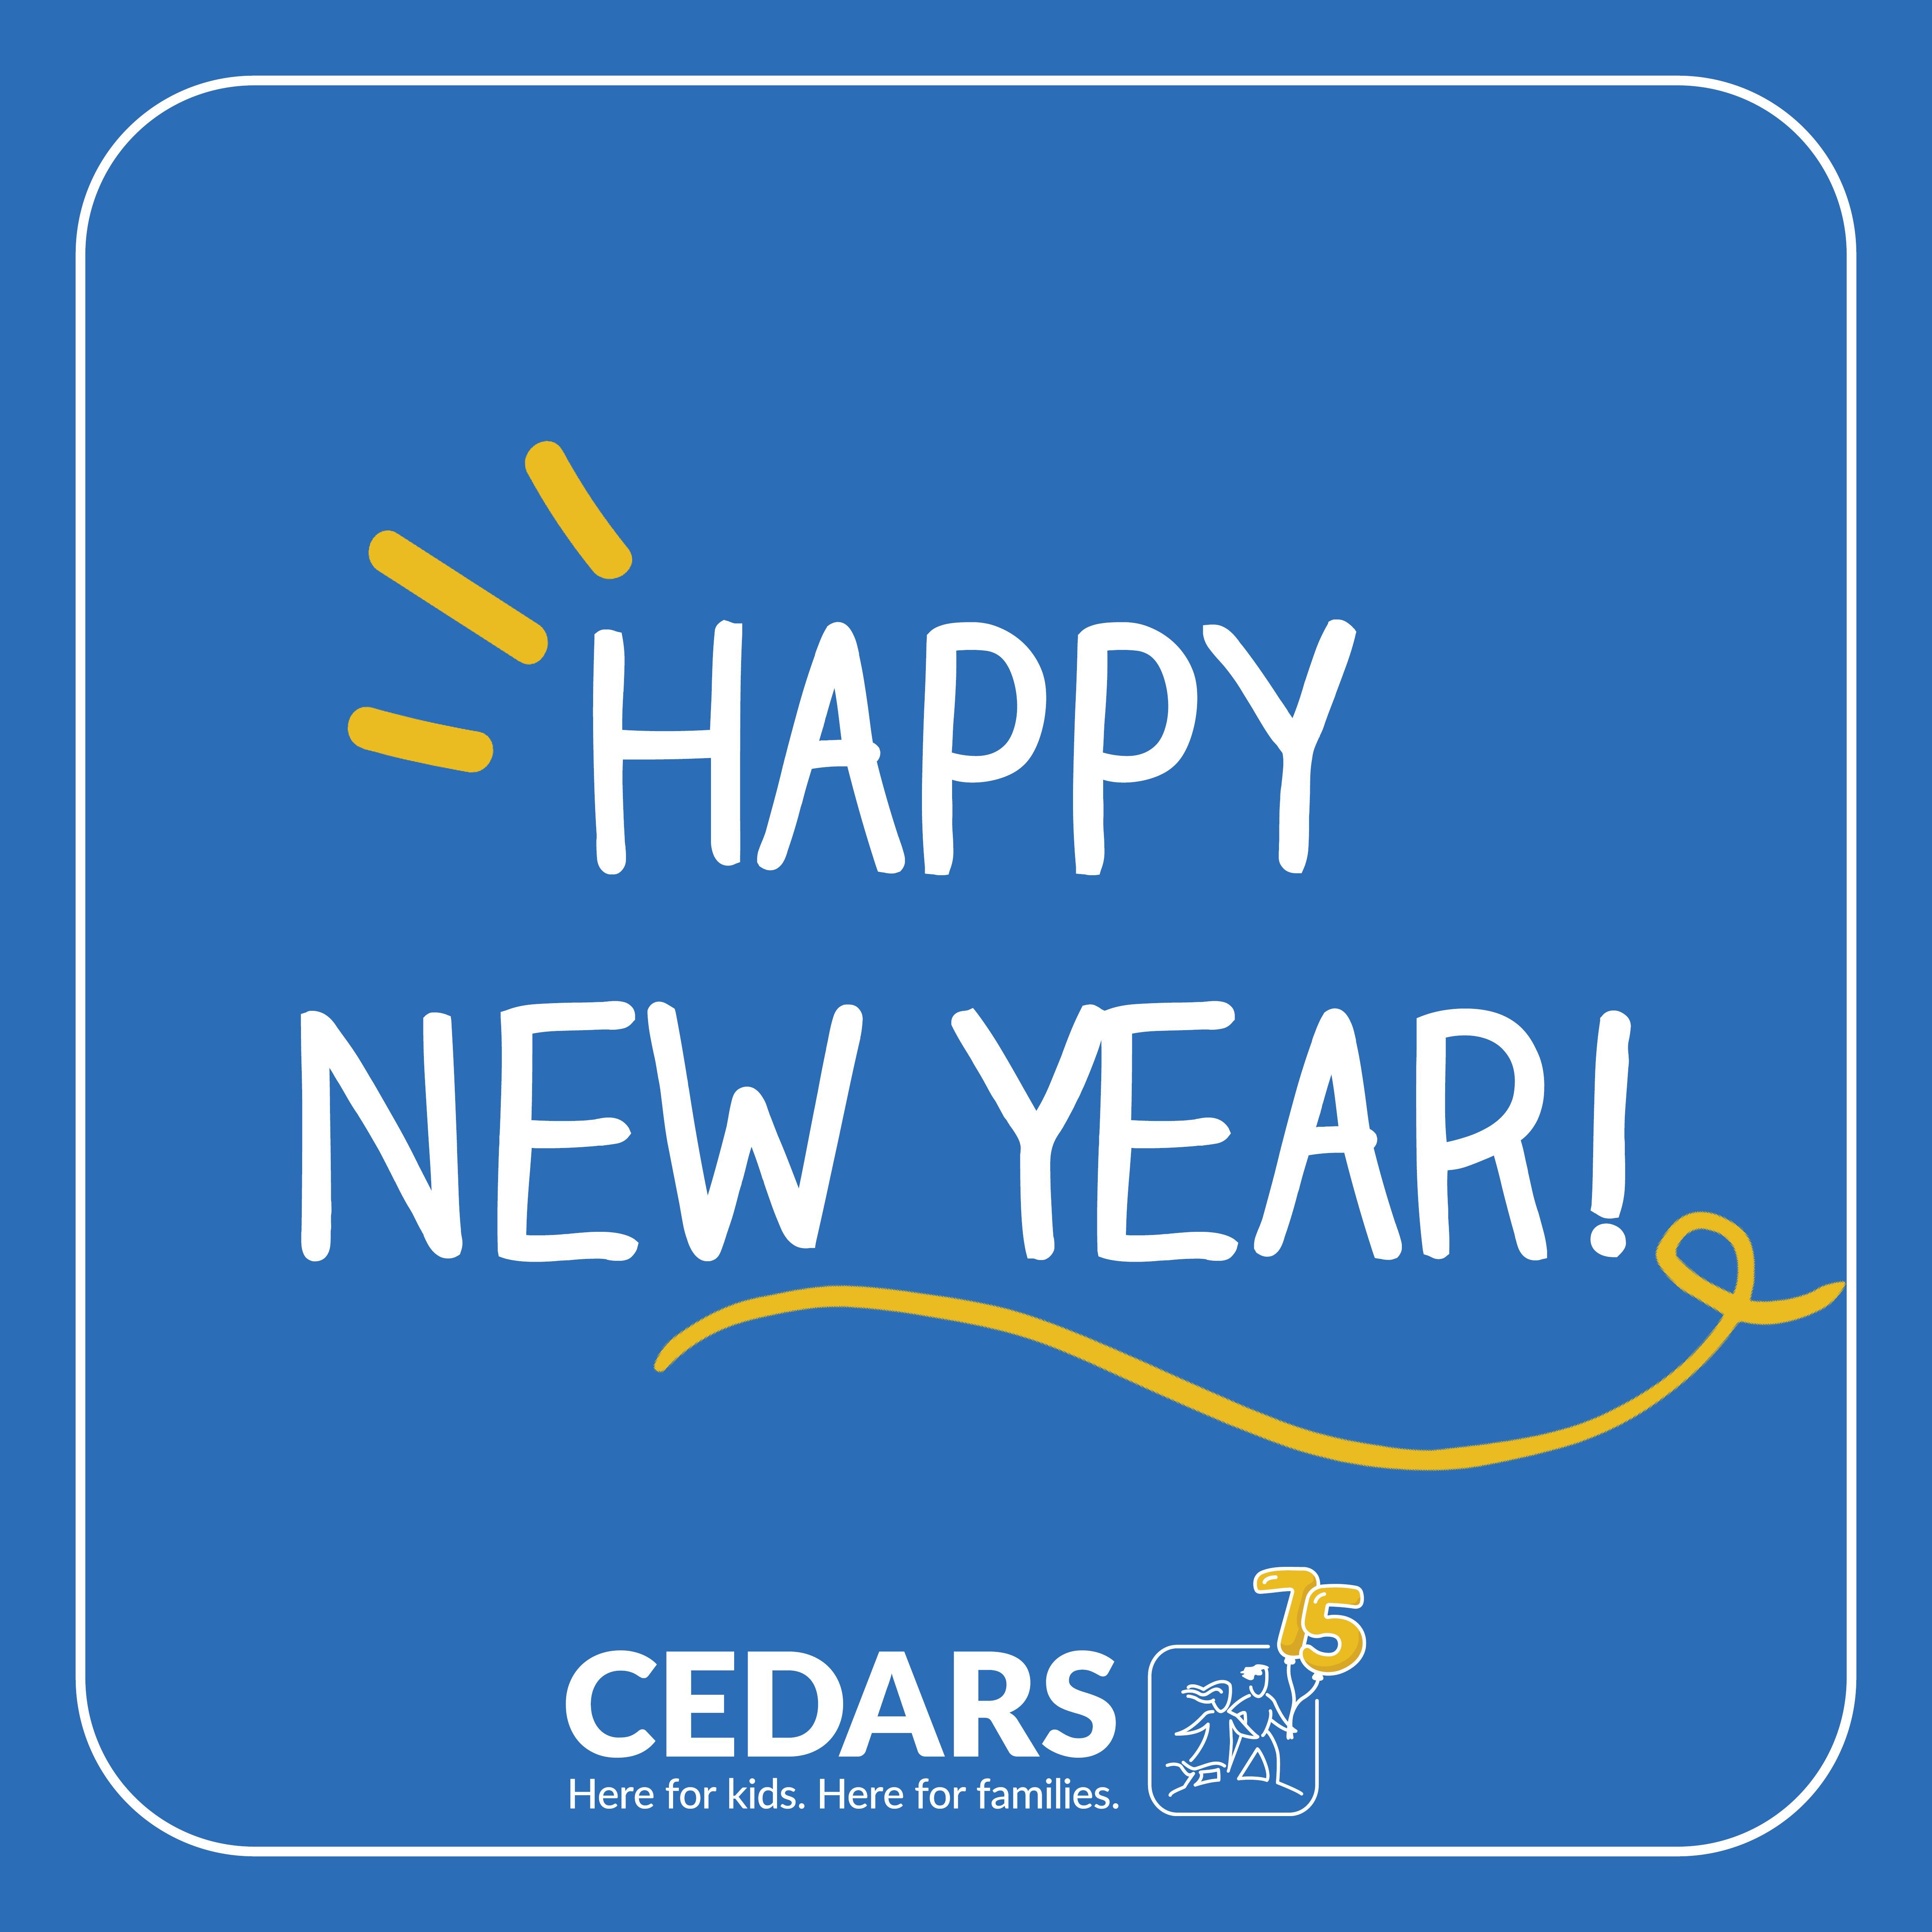 Happy New Year from CEDARS!